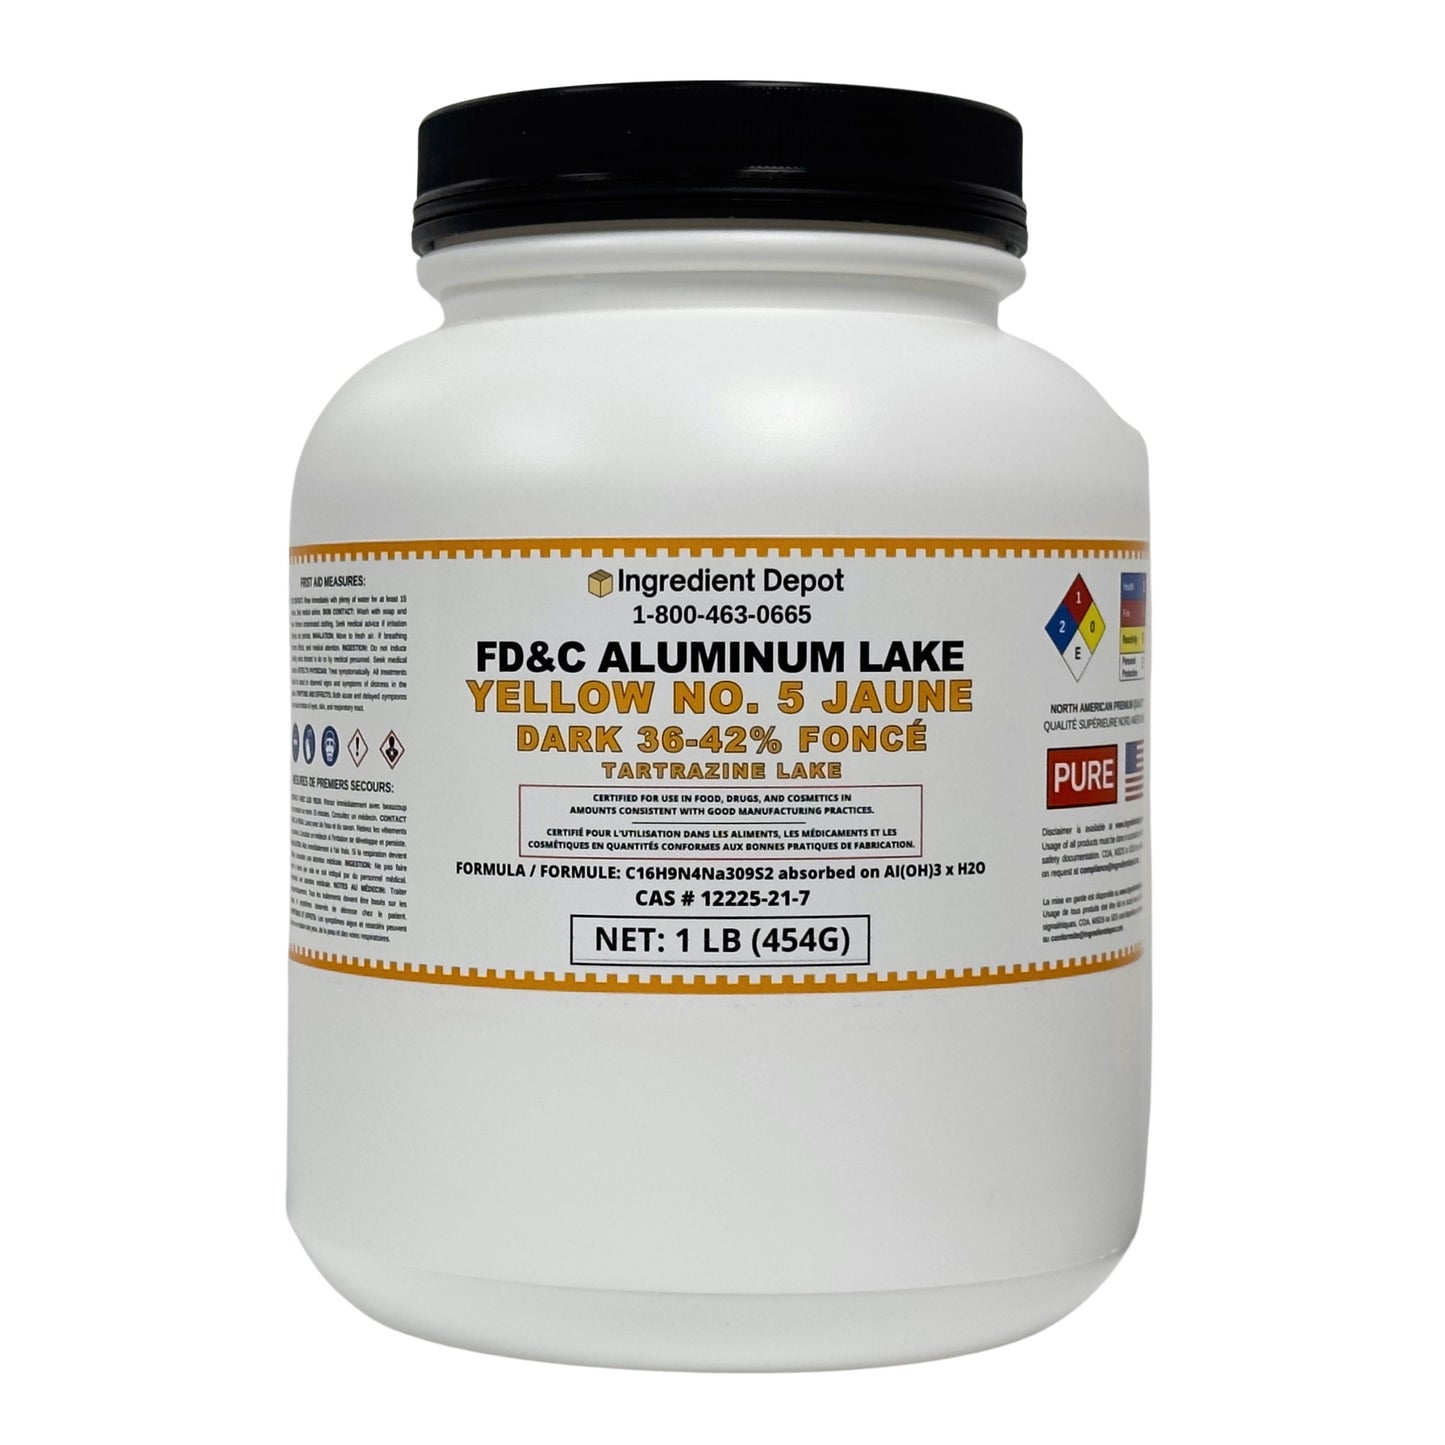 Yellow No. 5 FD&C Aluminum Lake Dark (36-42%) Tartrazine 1 lb (454g) - IngredientDepot.com